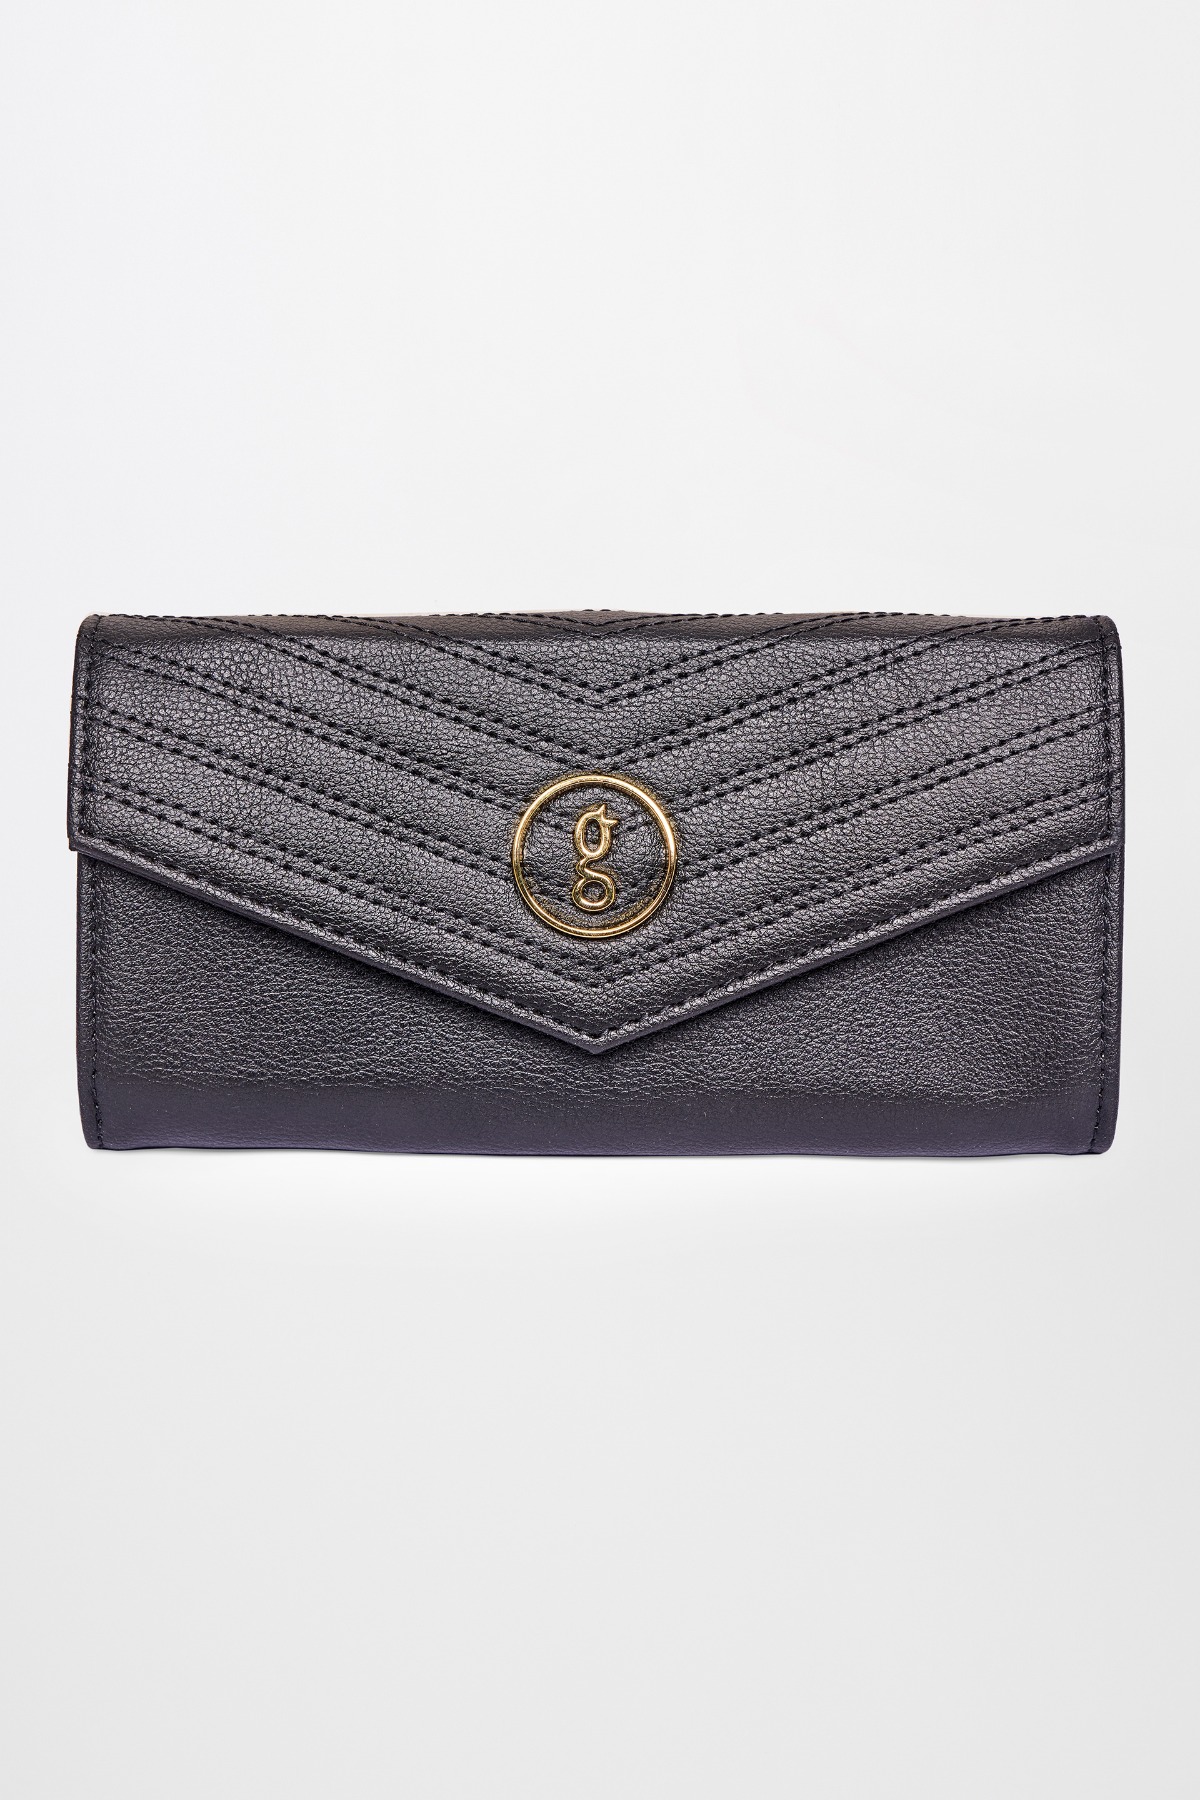 Buy Black Wallet Hand Bag Online at Best Price at Global Desi- 8905134468486